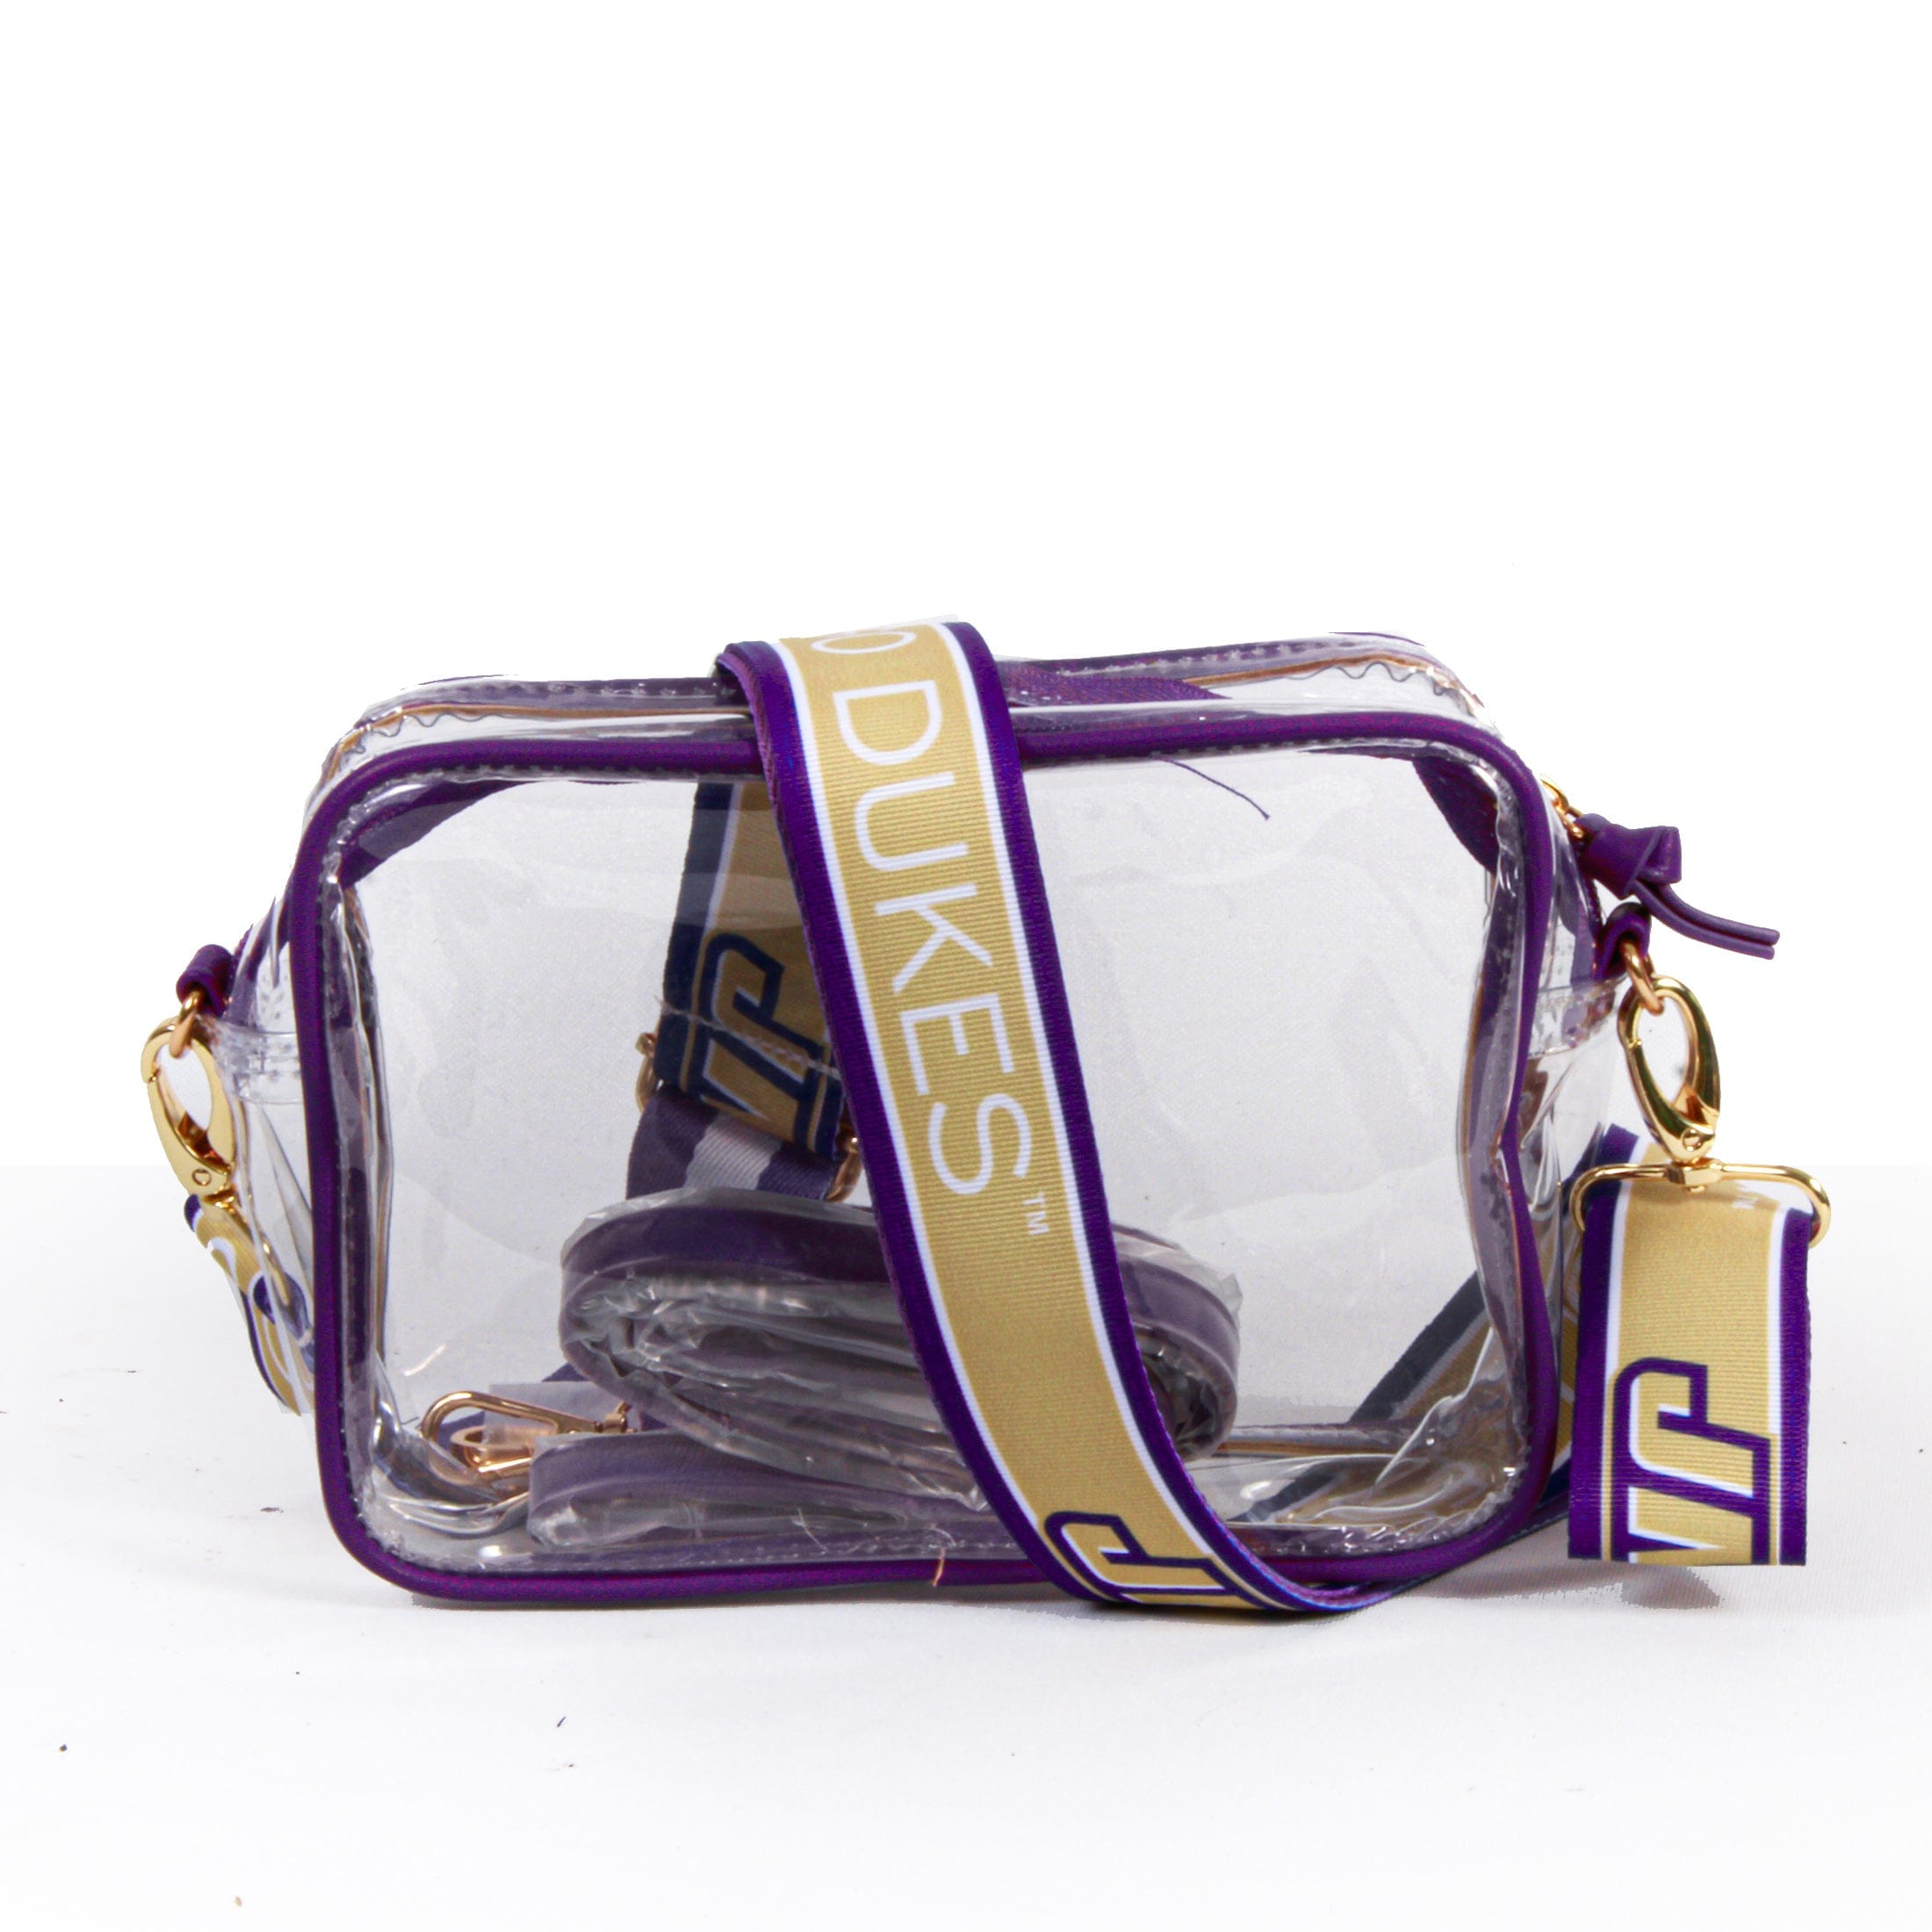 bridget clear purse with patterned shoulder straps james madison clear purse with patterned straps james madison purse 30117537841207